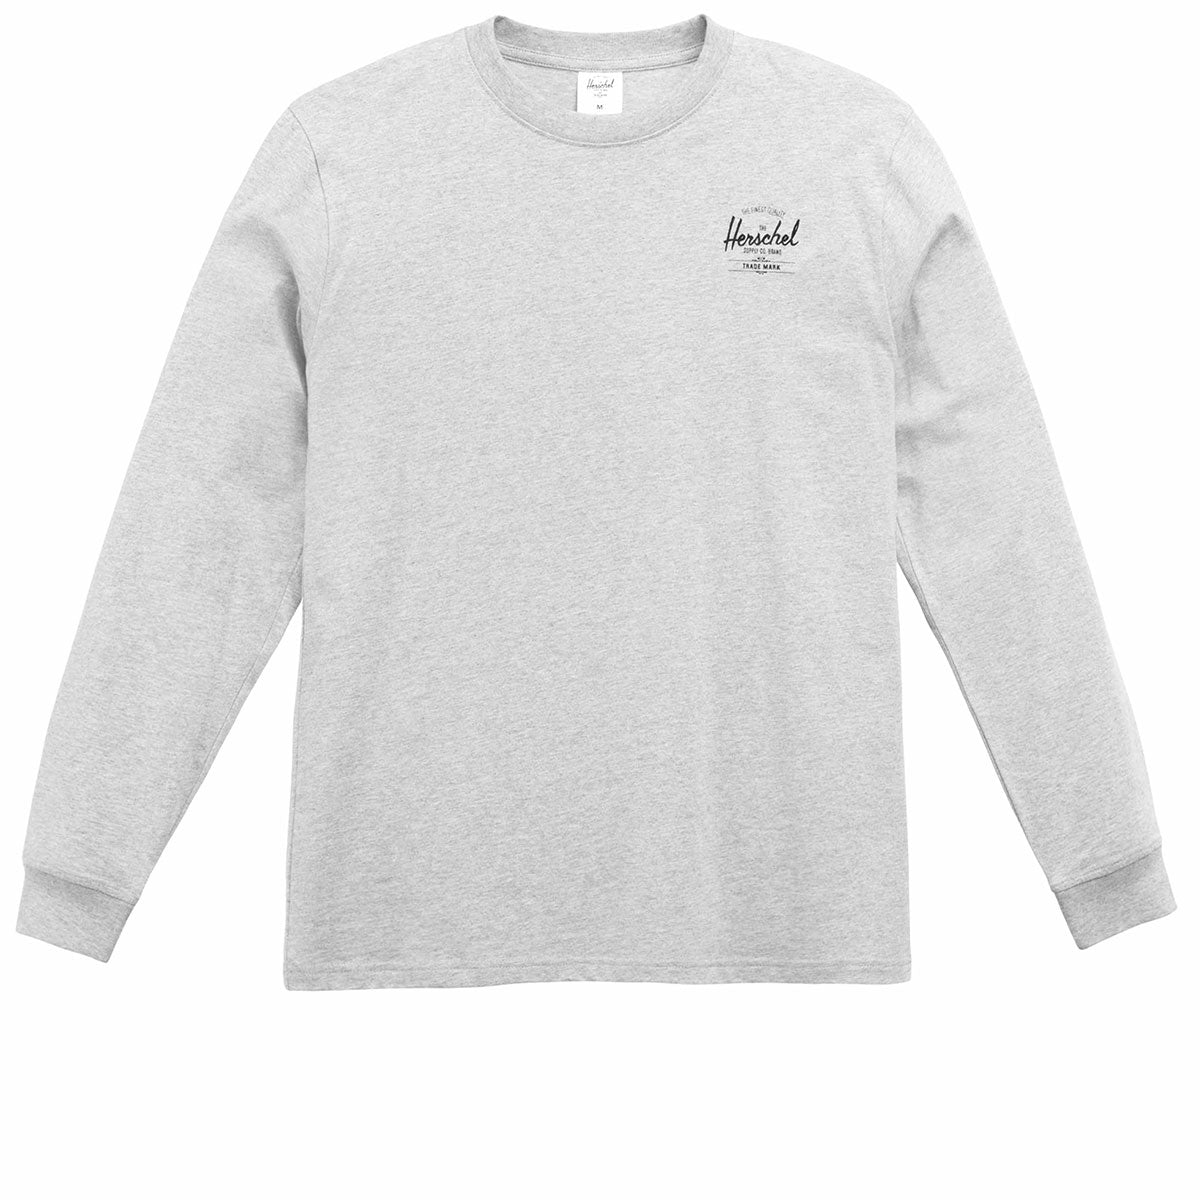 Herschel Supply Basic Long Sleeve T-Shirt - Heather Light Grey/Black image 1